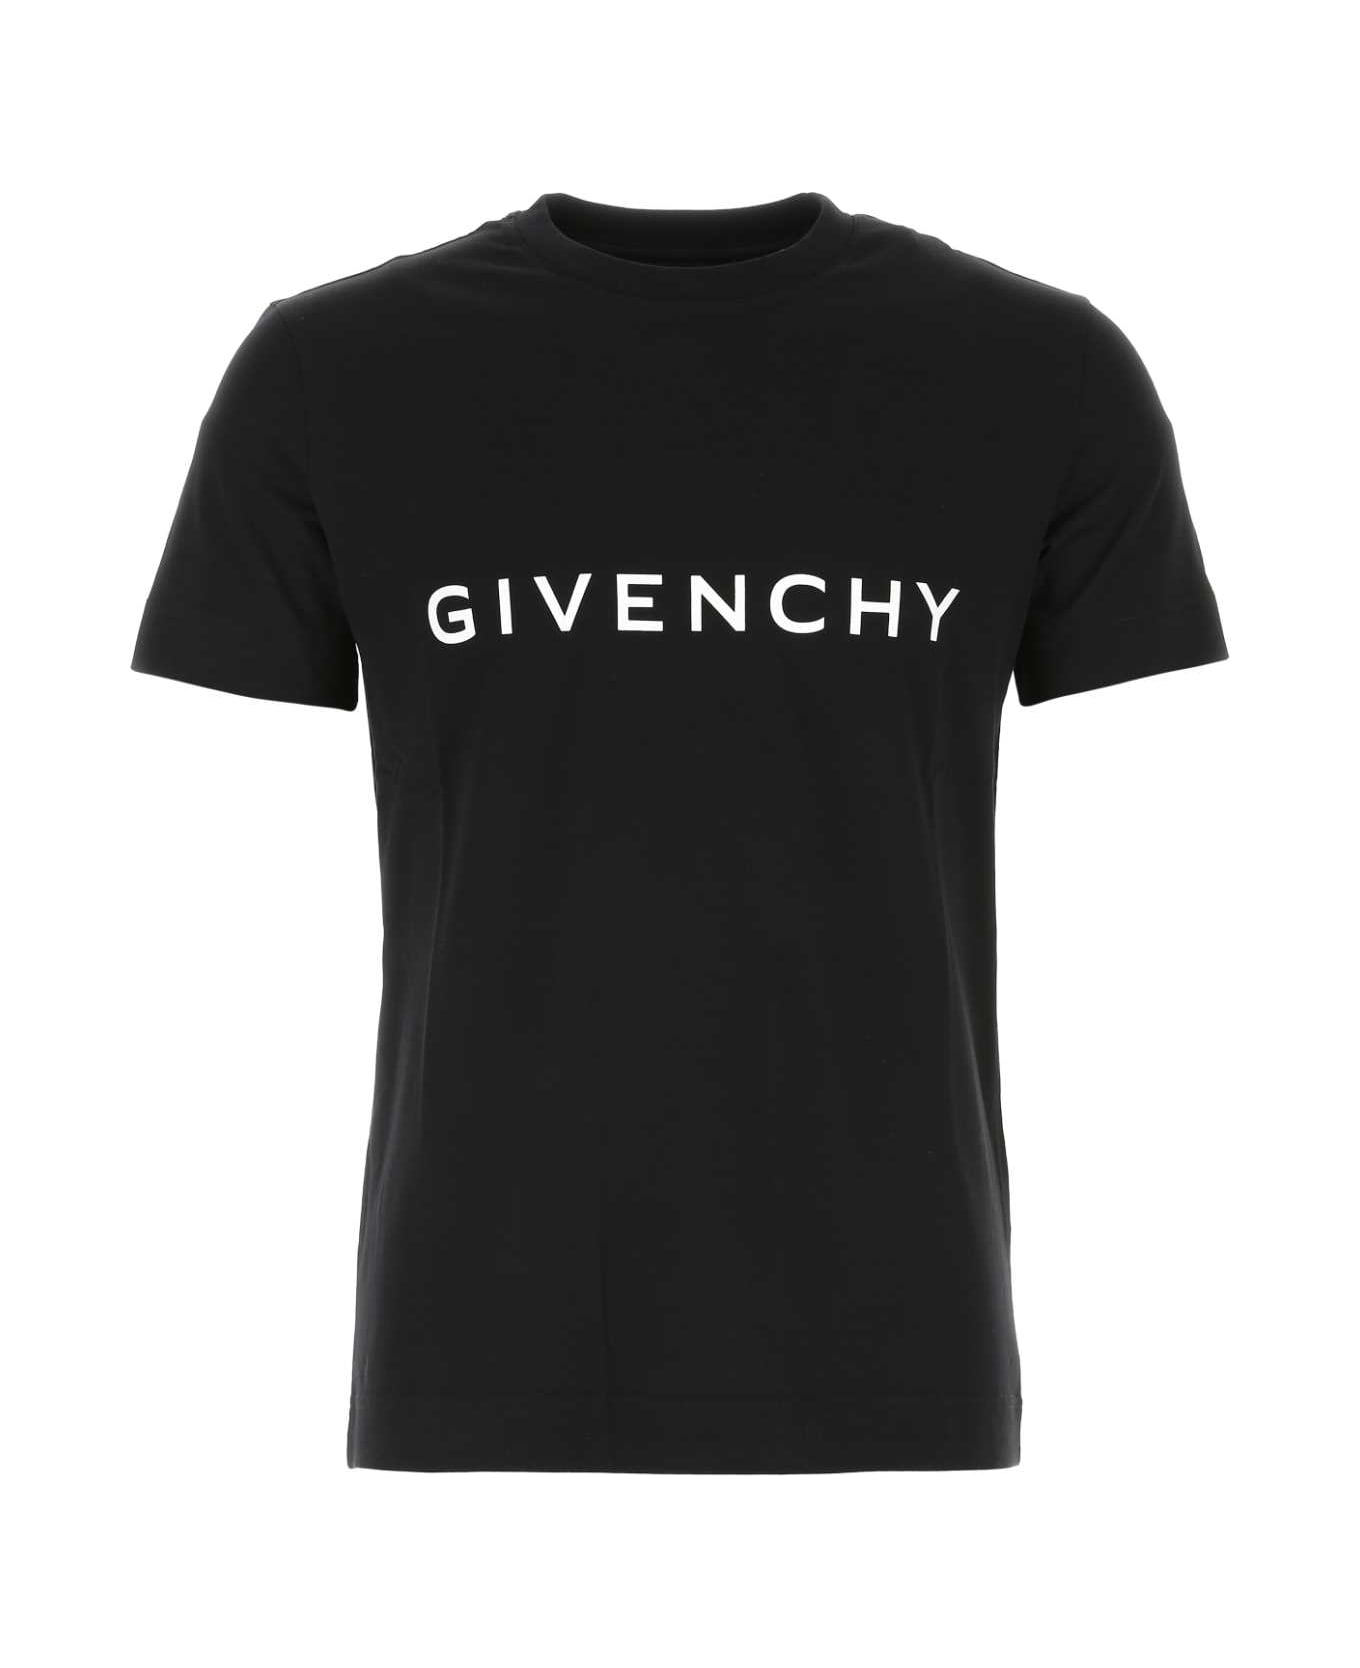 Givenchy Black Cotton T-shirt - 001 シャツ